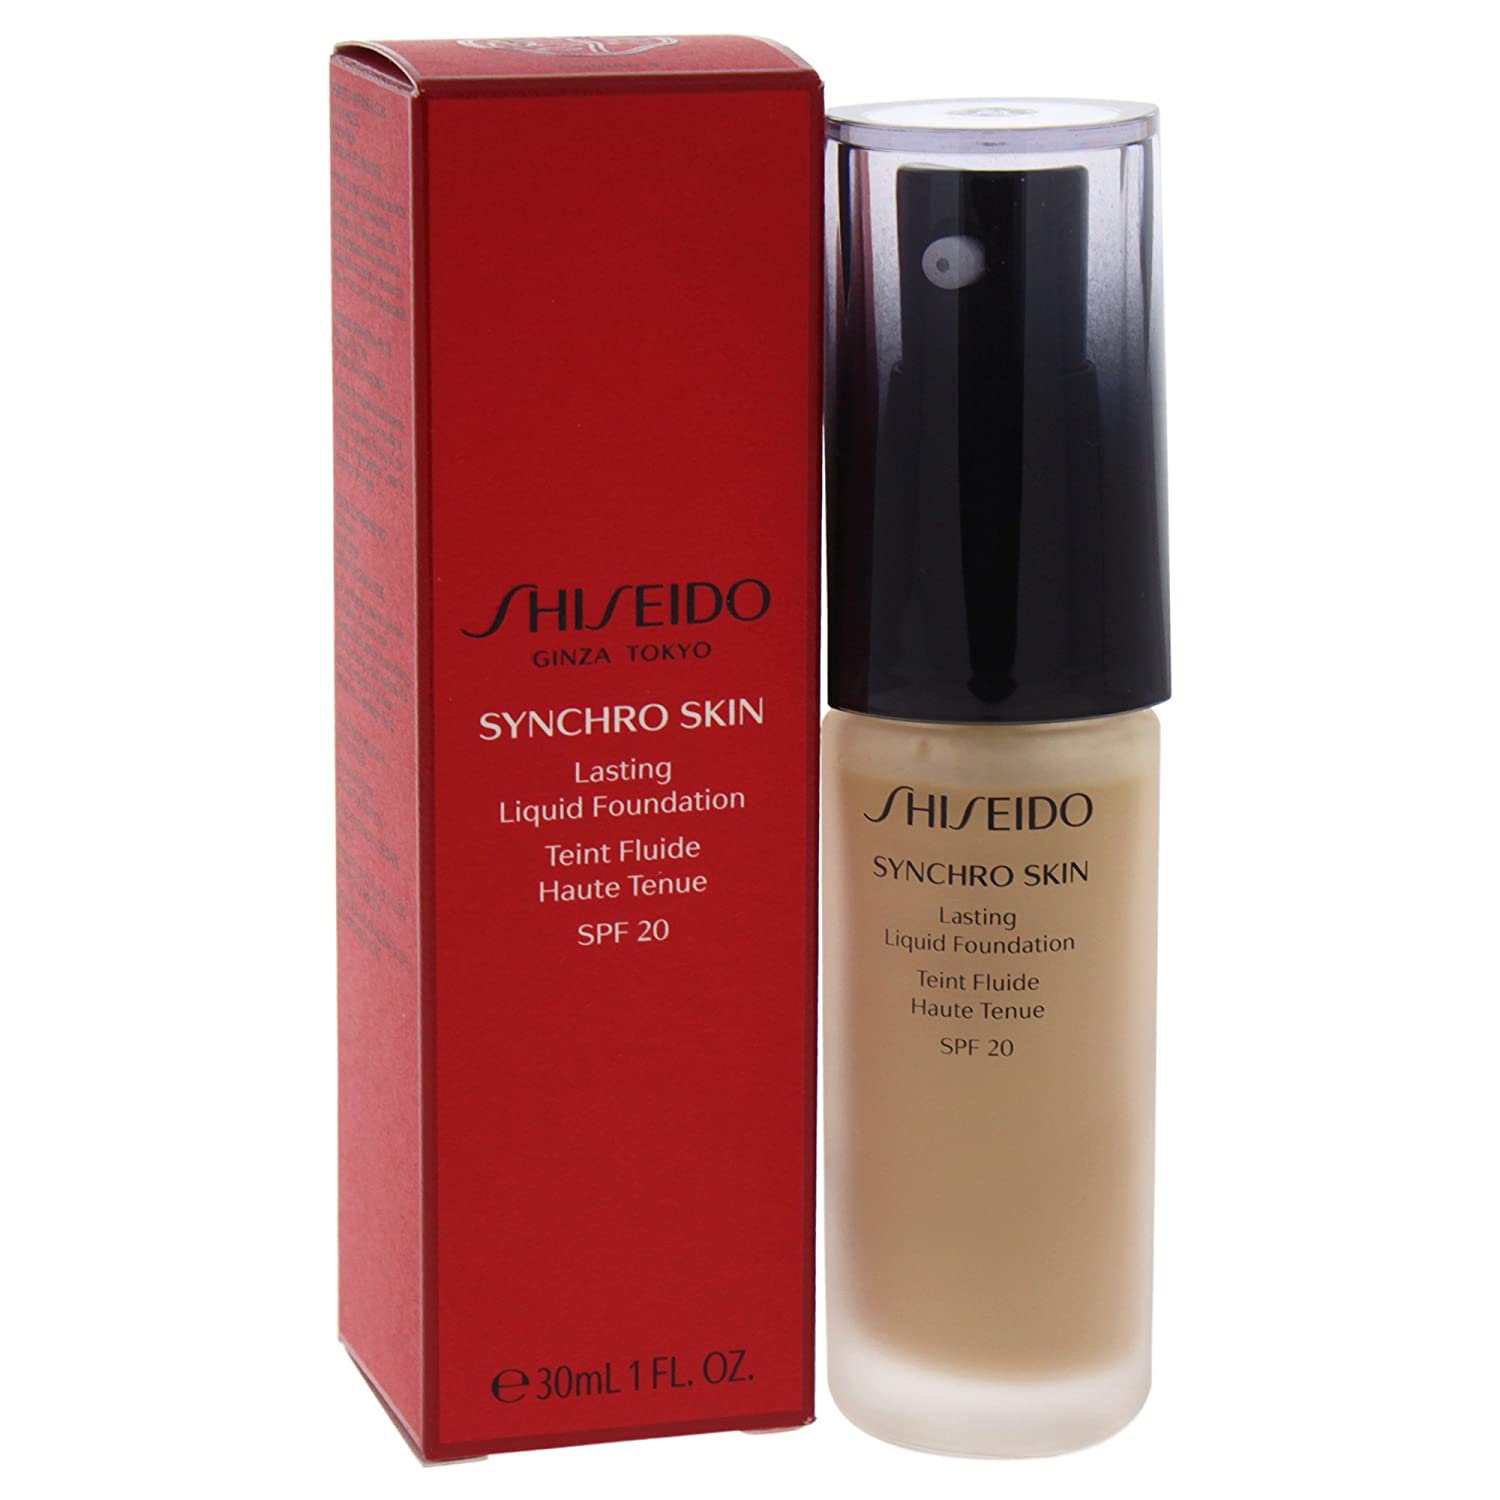 Shiseido Synchro Skin Lasting Liquid Foundation Golden 4 Pack of 1 x 30 g)